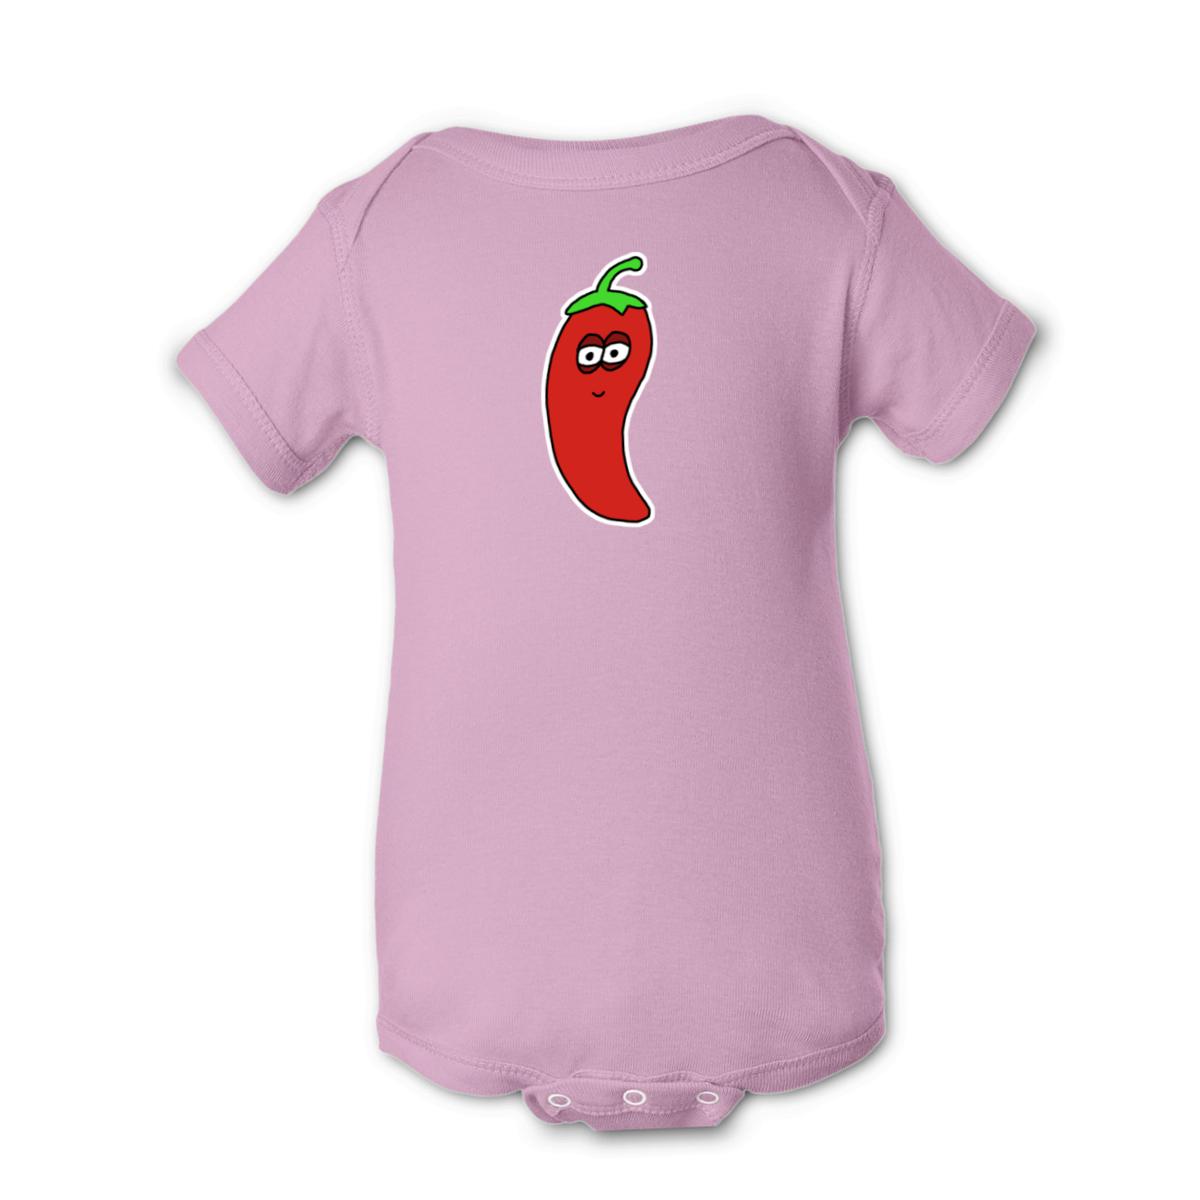 Chili Pepper Onesie 12M pink